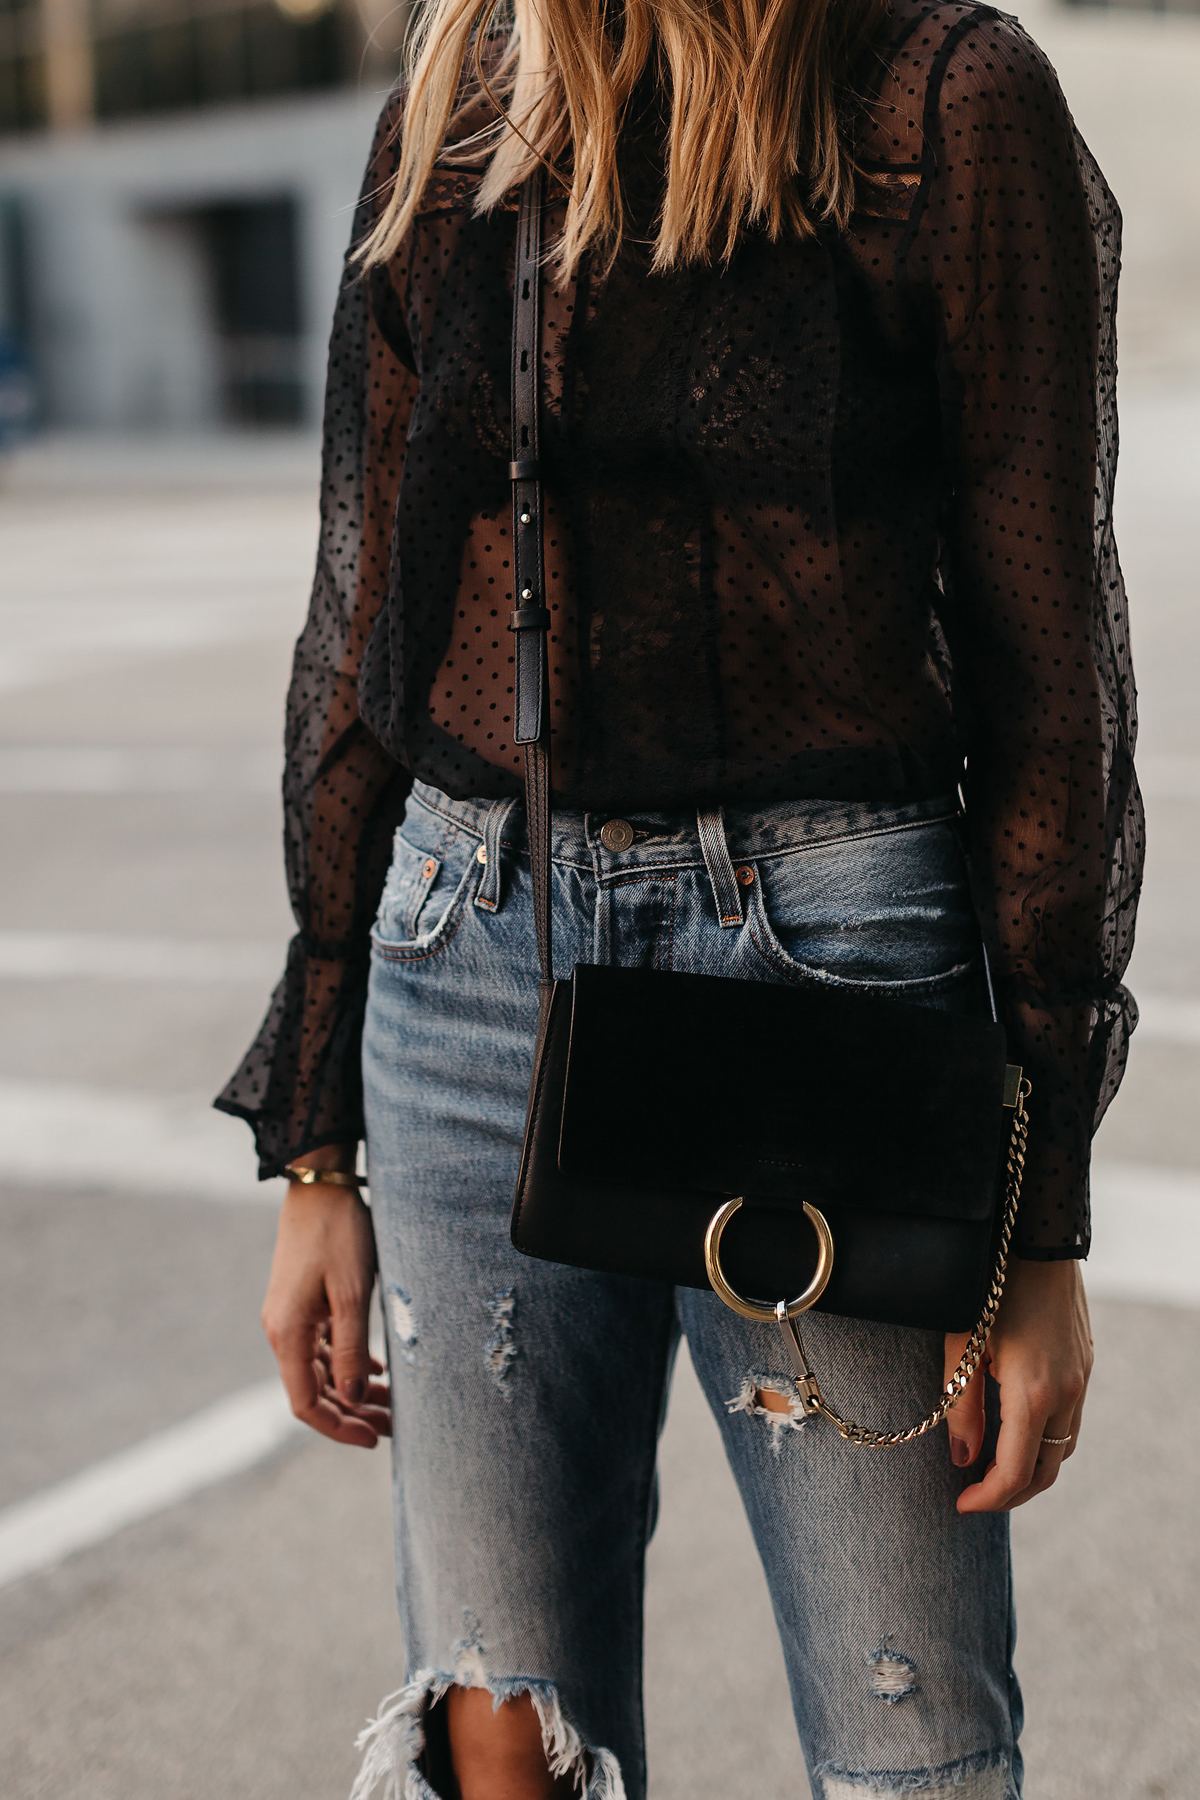 Anine Bing Black Lace Top Chloe Faye Black Handbag Denim Ripped Jeans Fashion Jackson Dallas Blogger Fashion Blogger Street Style